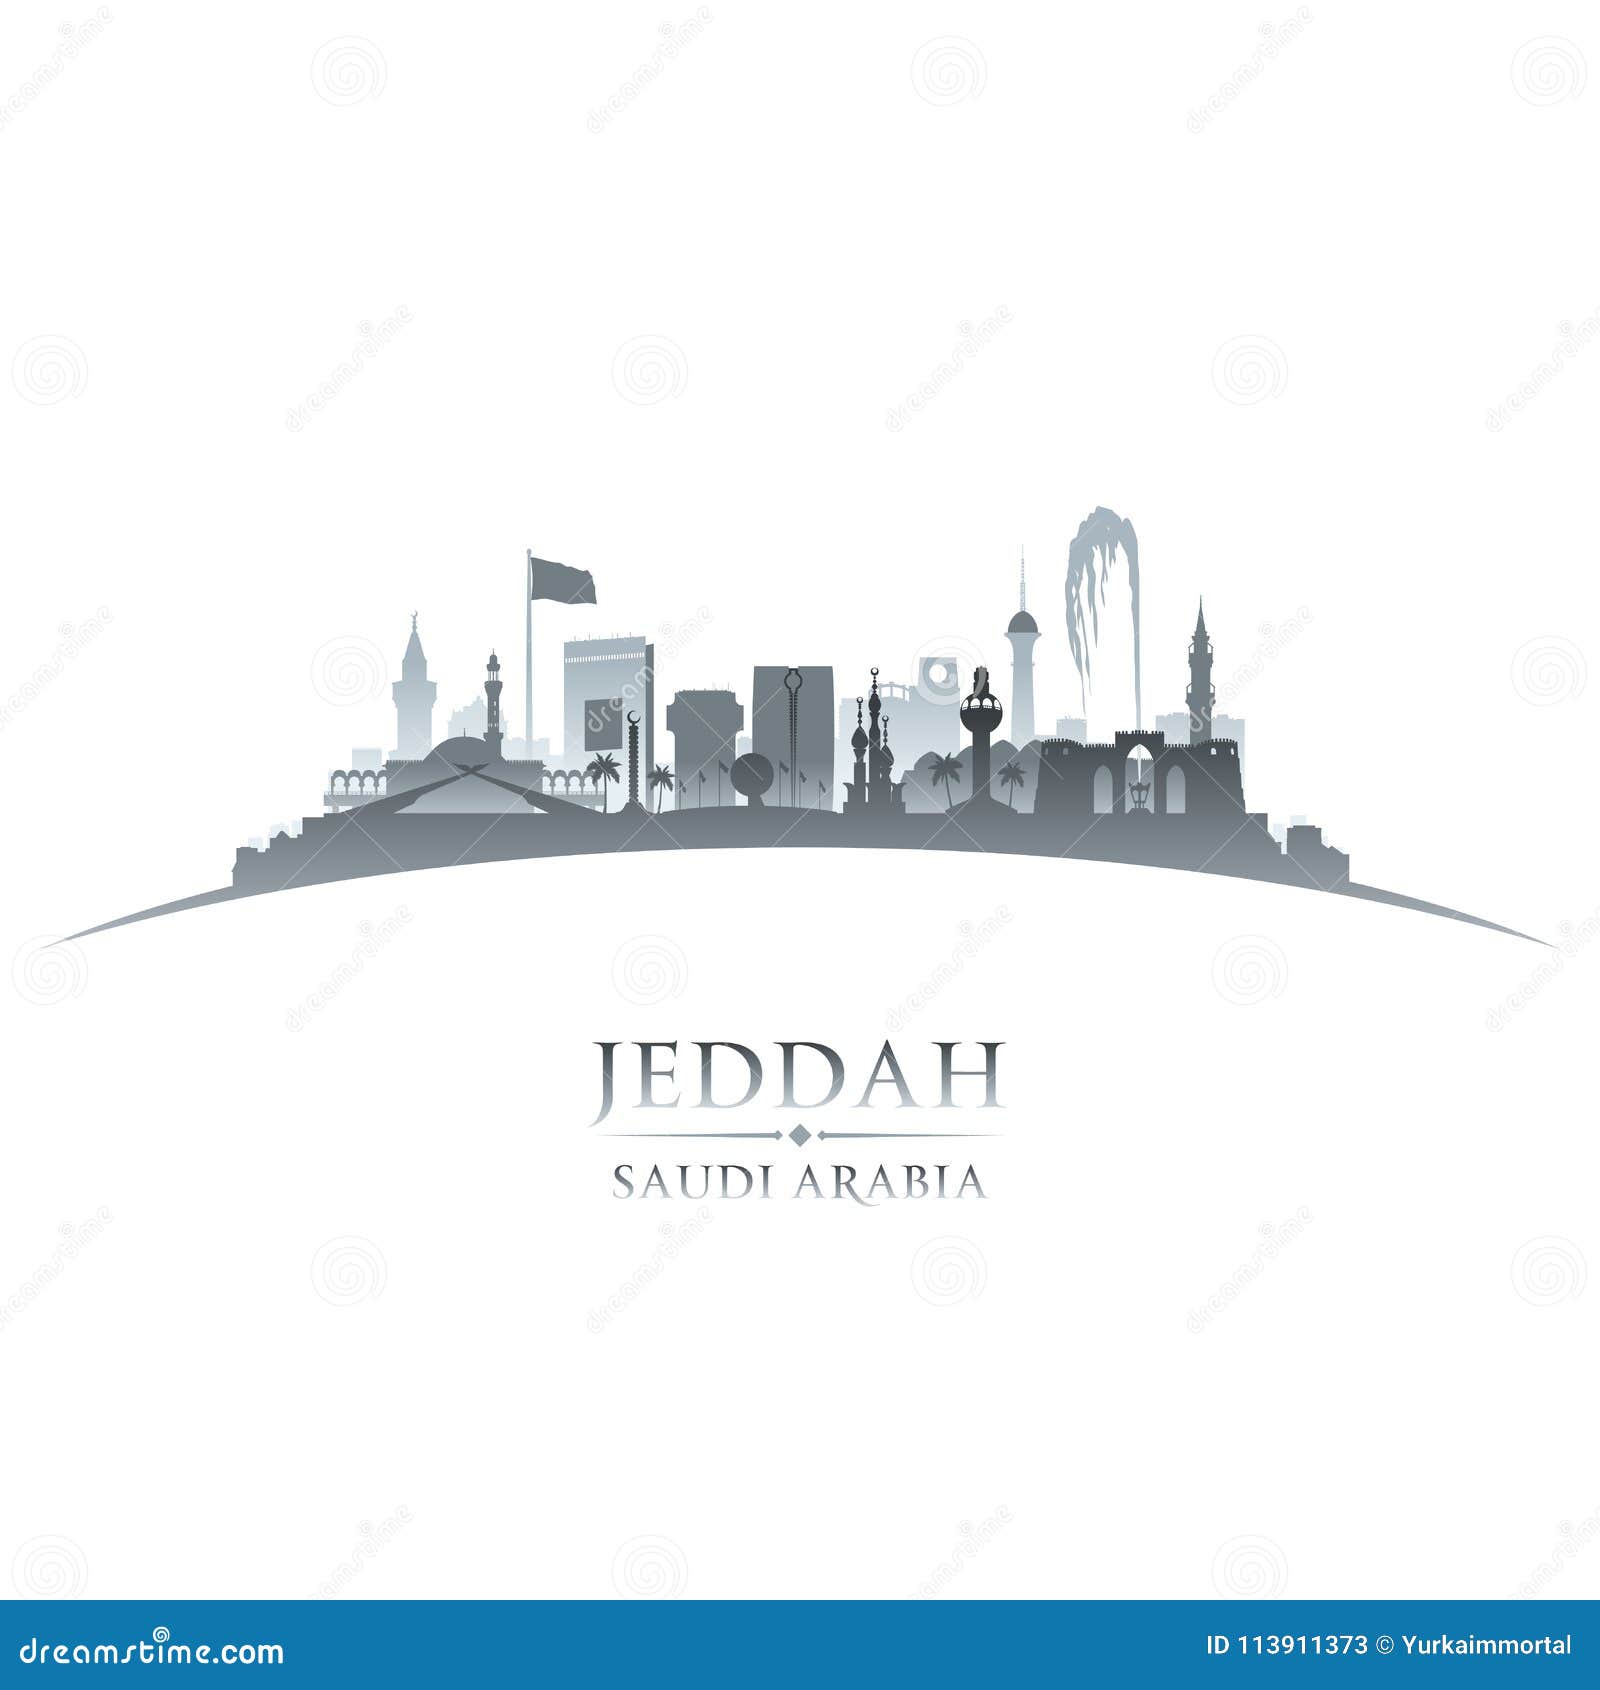 jeddah saudi arabia city skyline silhouette white background